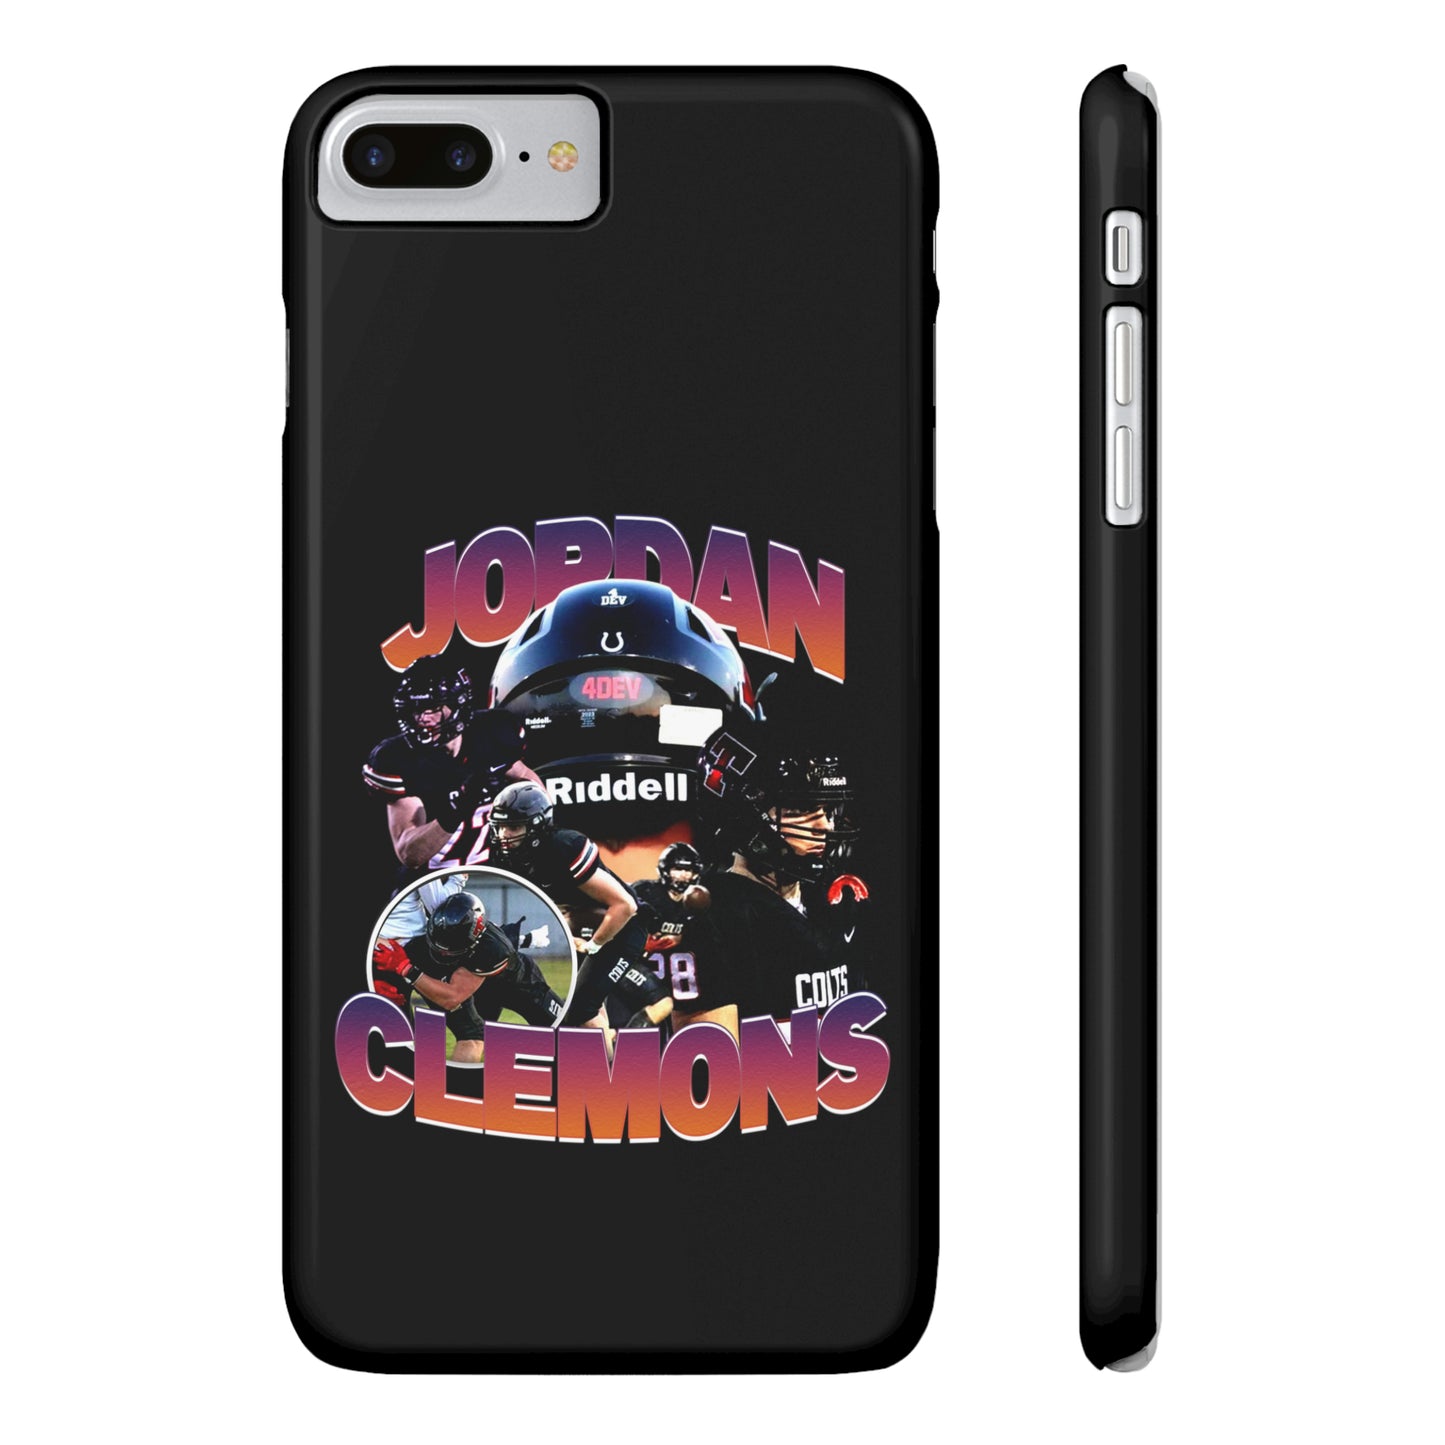 Jordan Clemons Slim Phone Cases